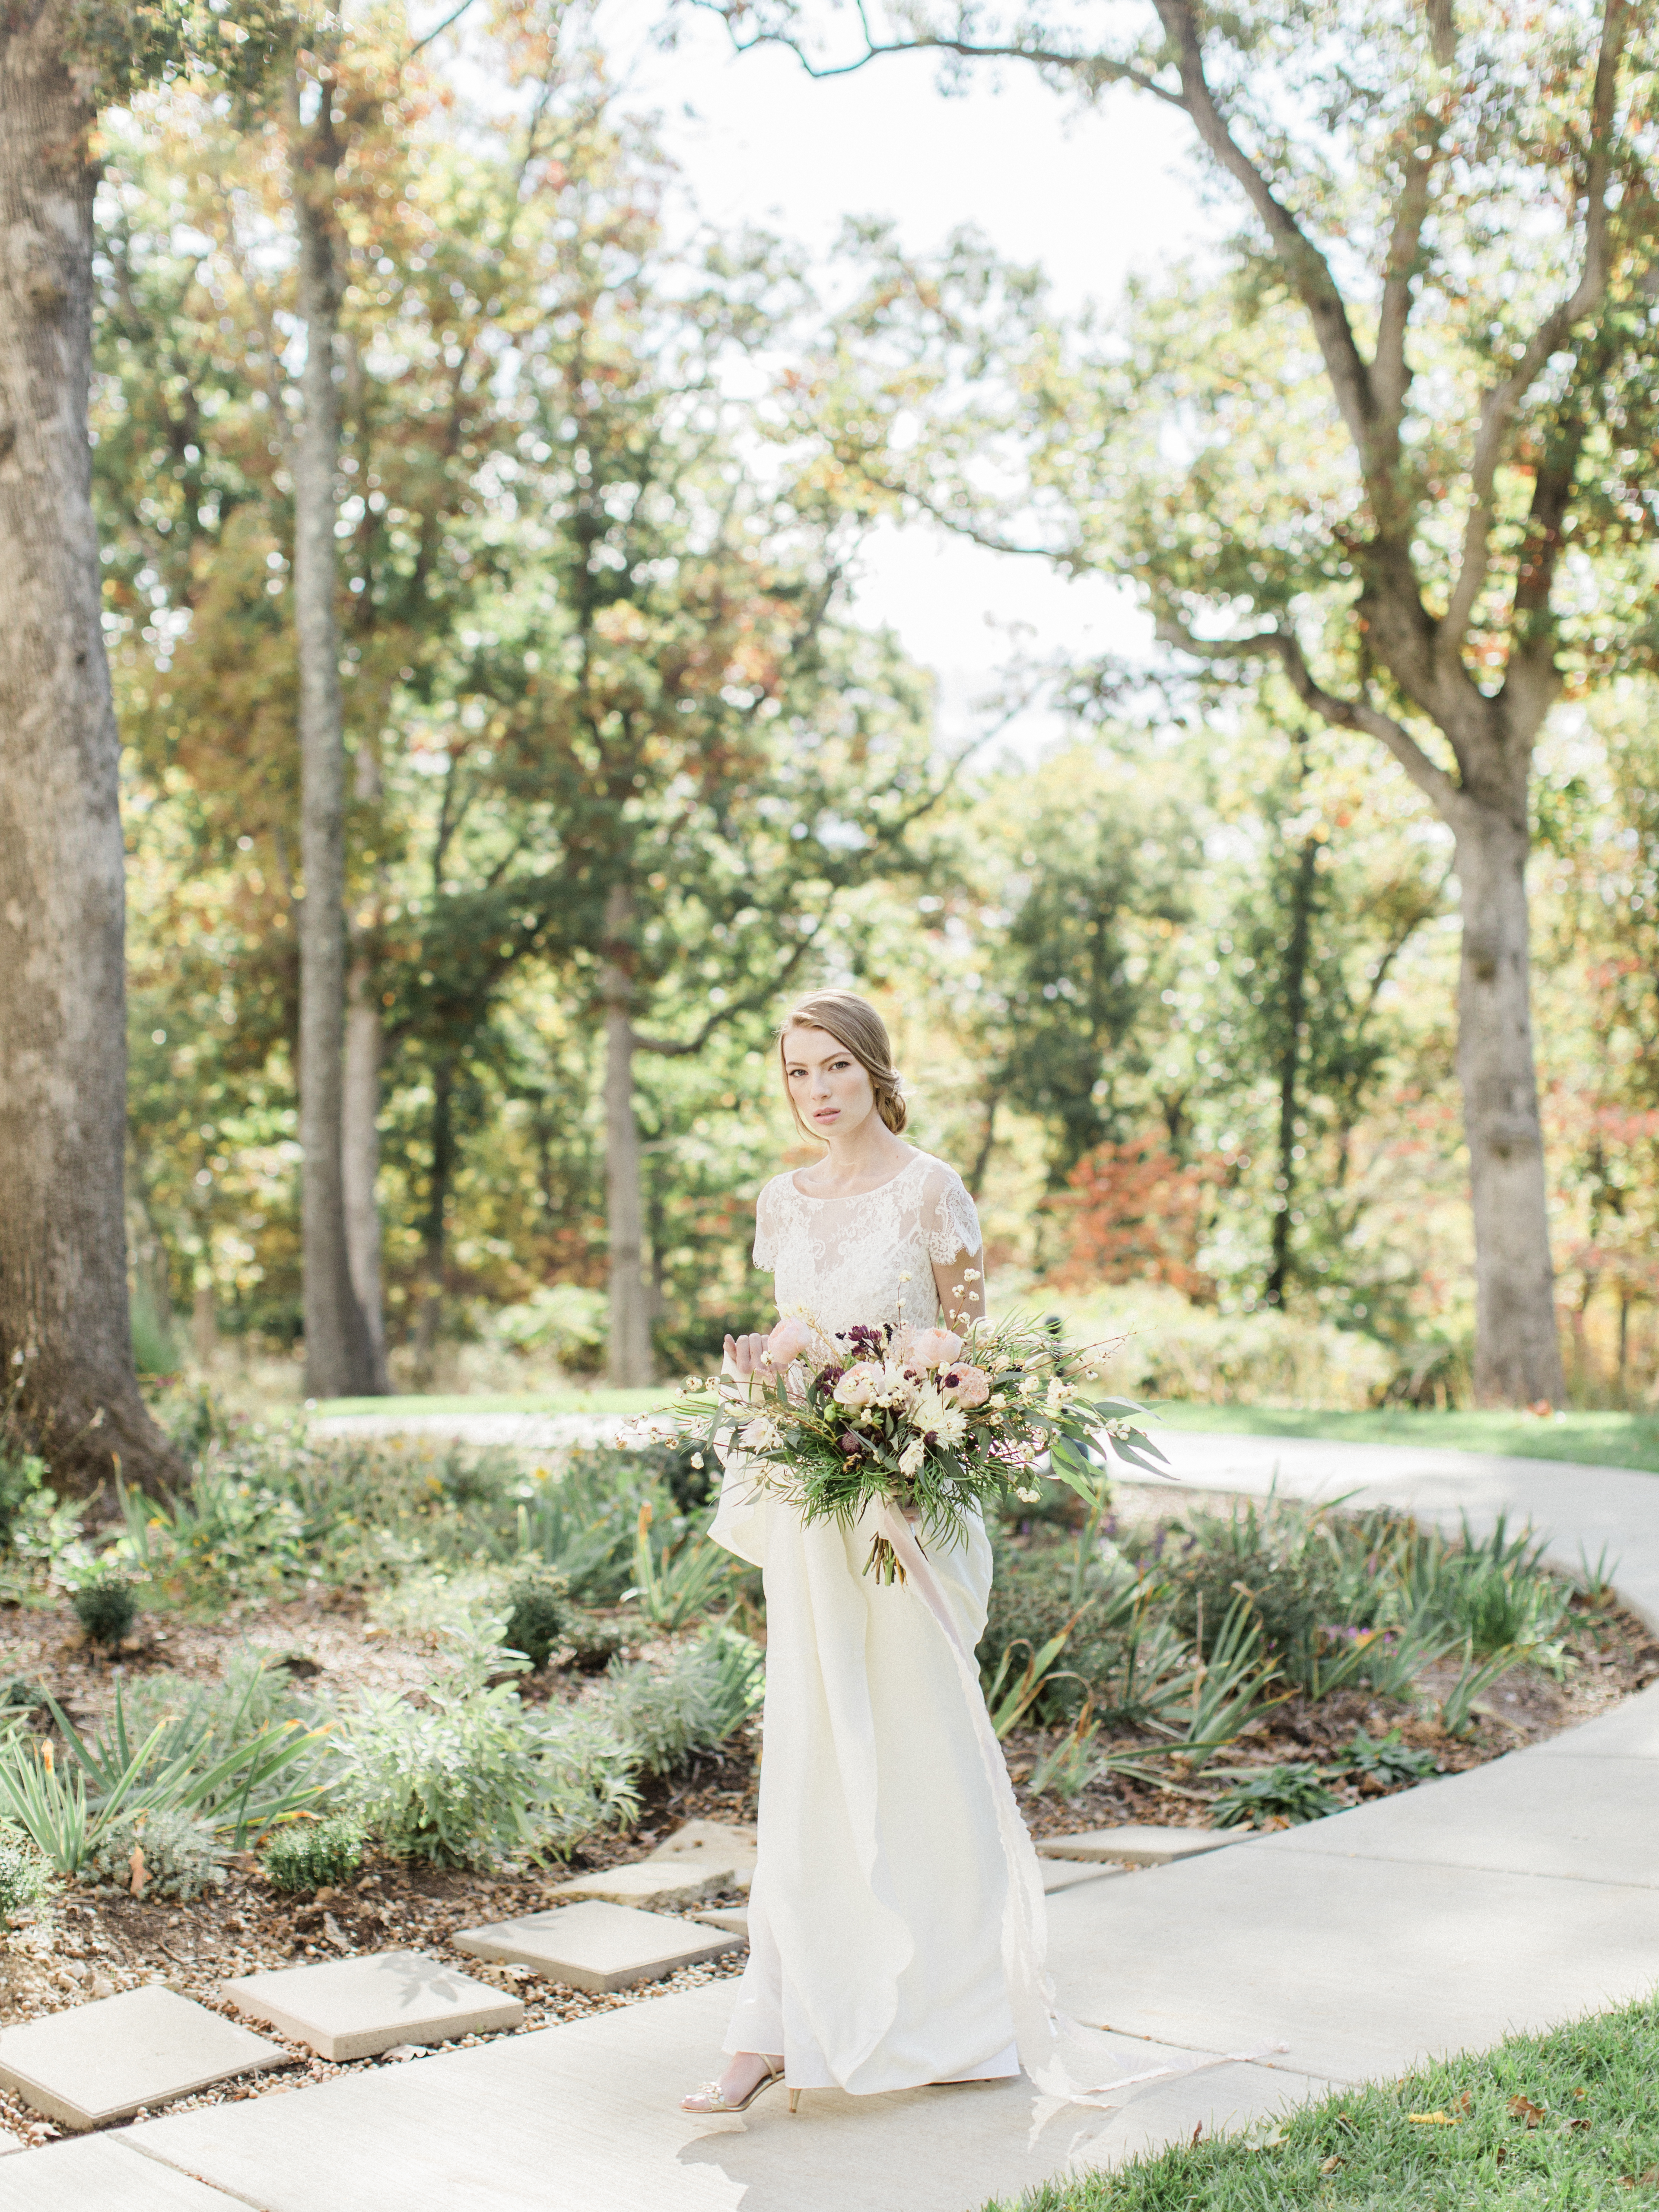 A beautiful bride captured on film by destination wedding photorapher Love Tree Studios at Silver Oaks Chateau in St. Louis Missouri.